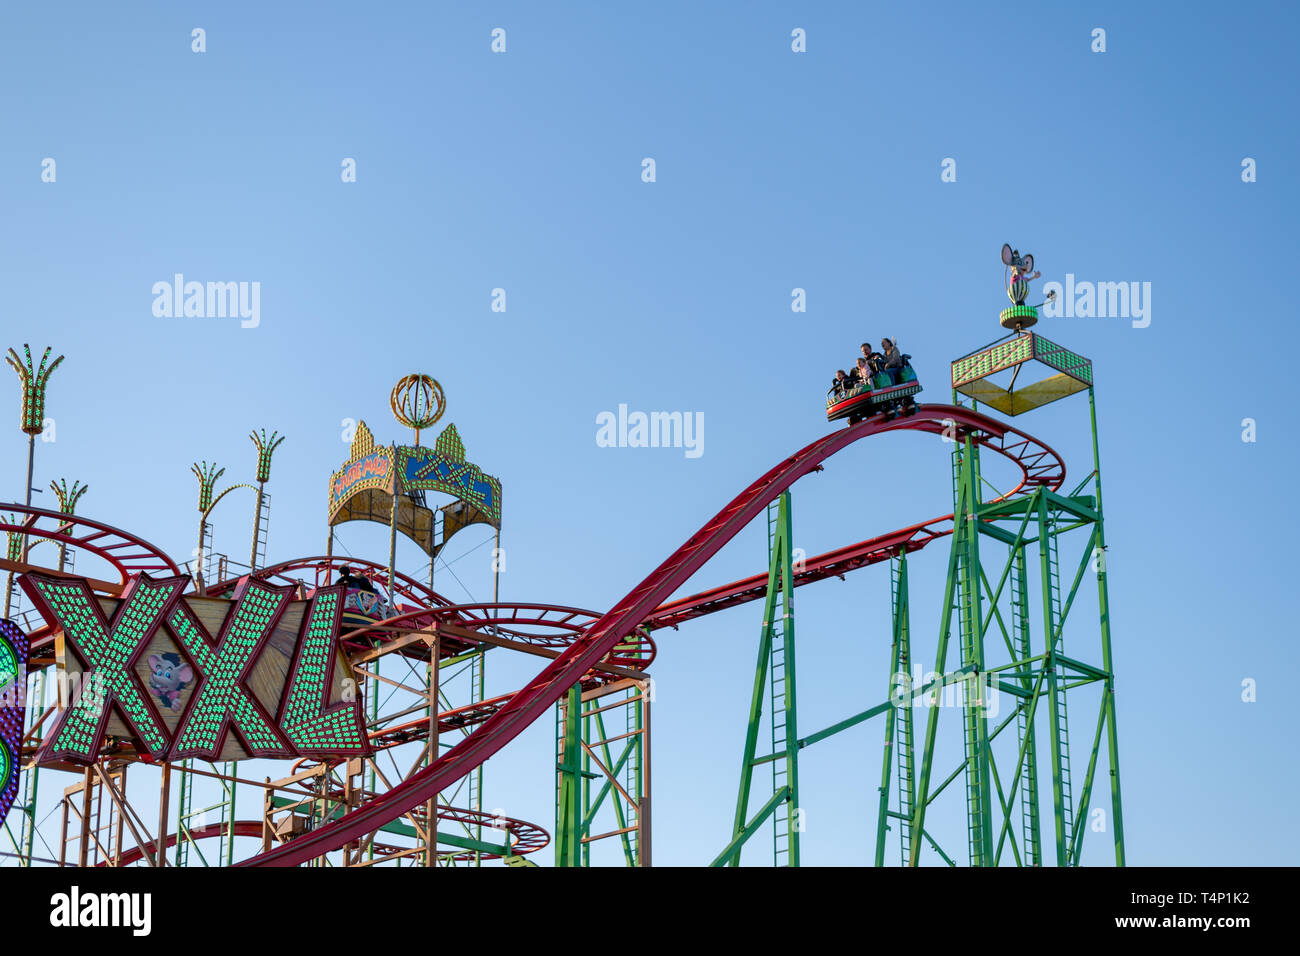 hamburg, Germany - Roller coaster in the Hamburger amusement park DOM Stock Photo